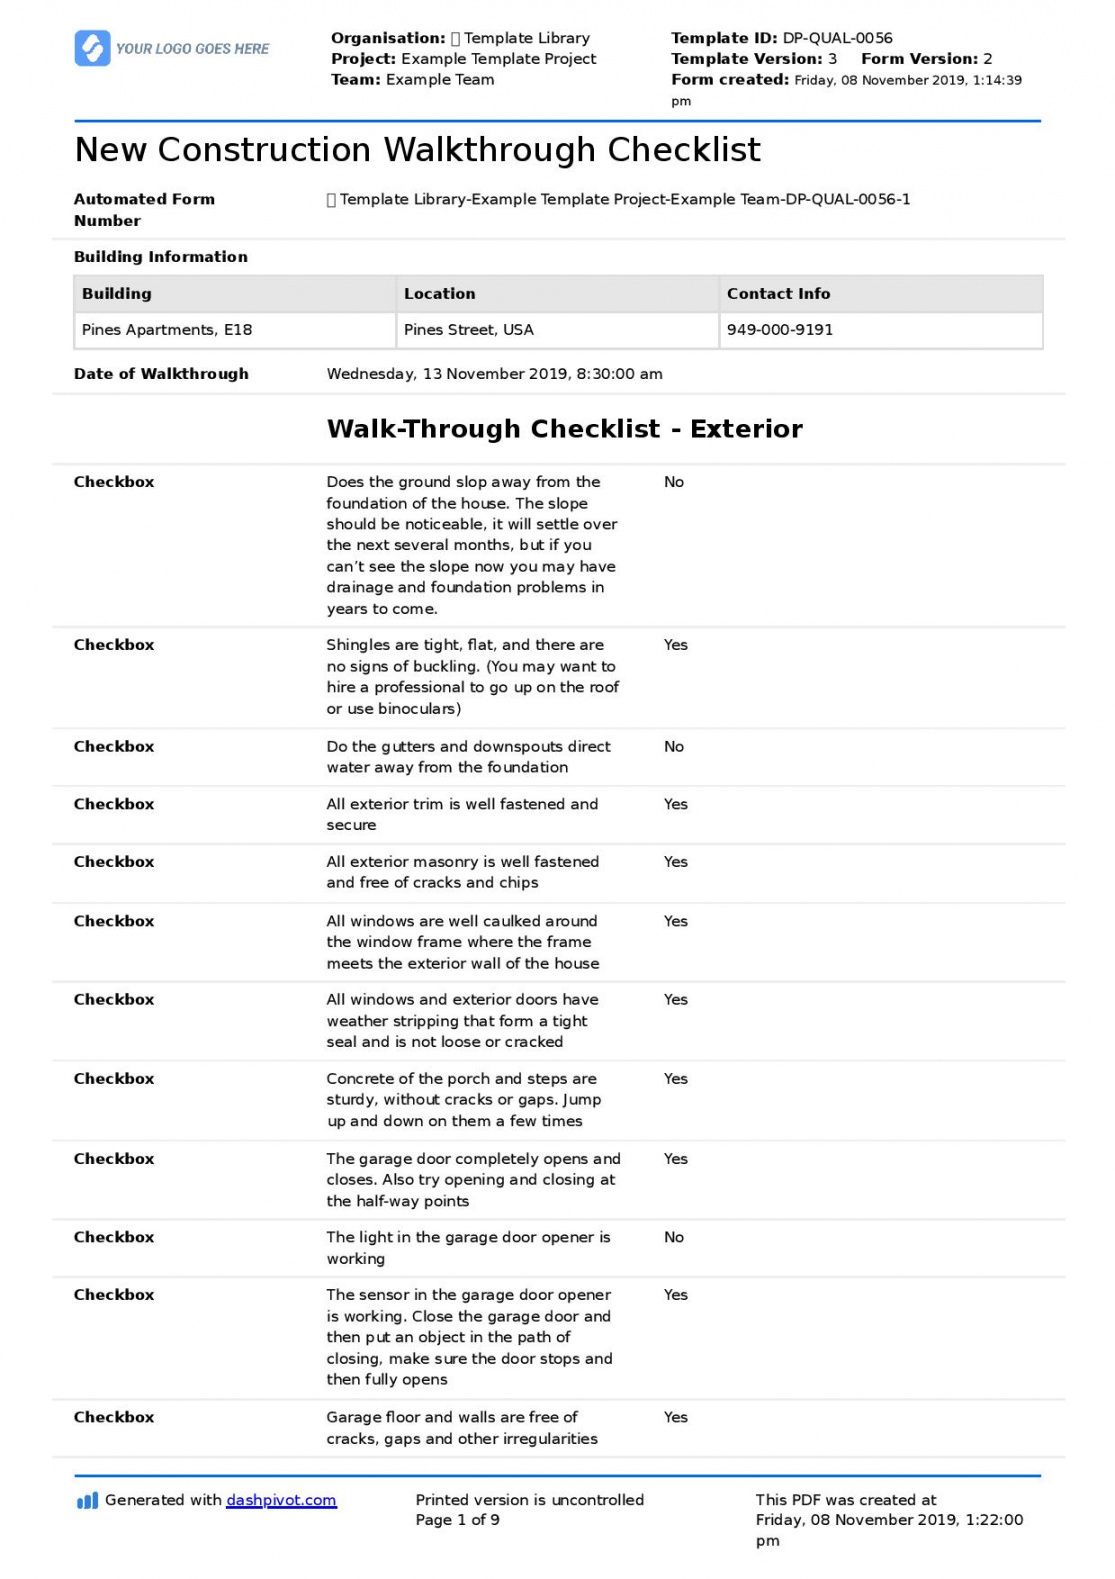 editable new construction walkthrough checklist better than pdf final walk through checklist template